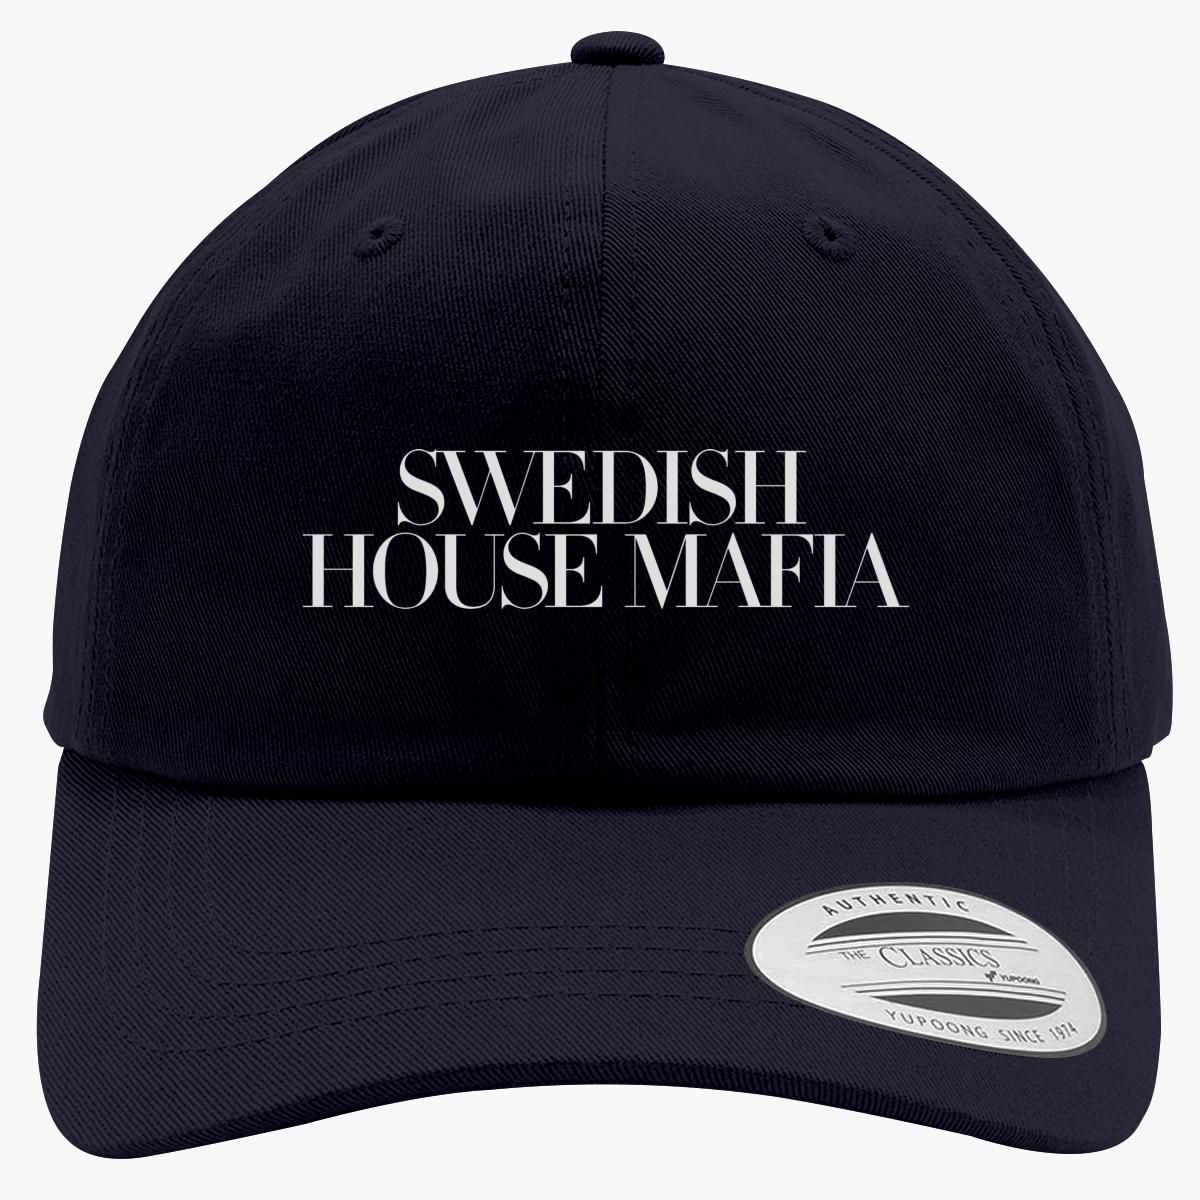 swedish house mafia logos